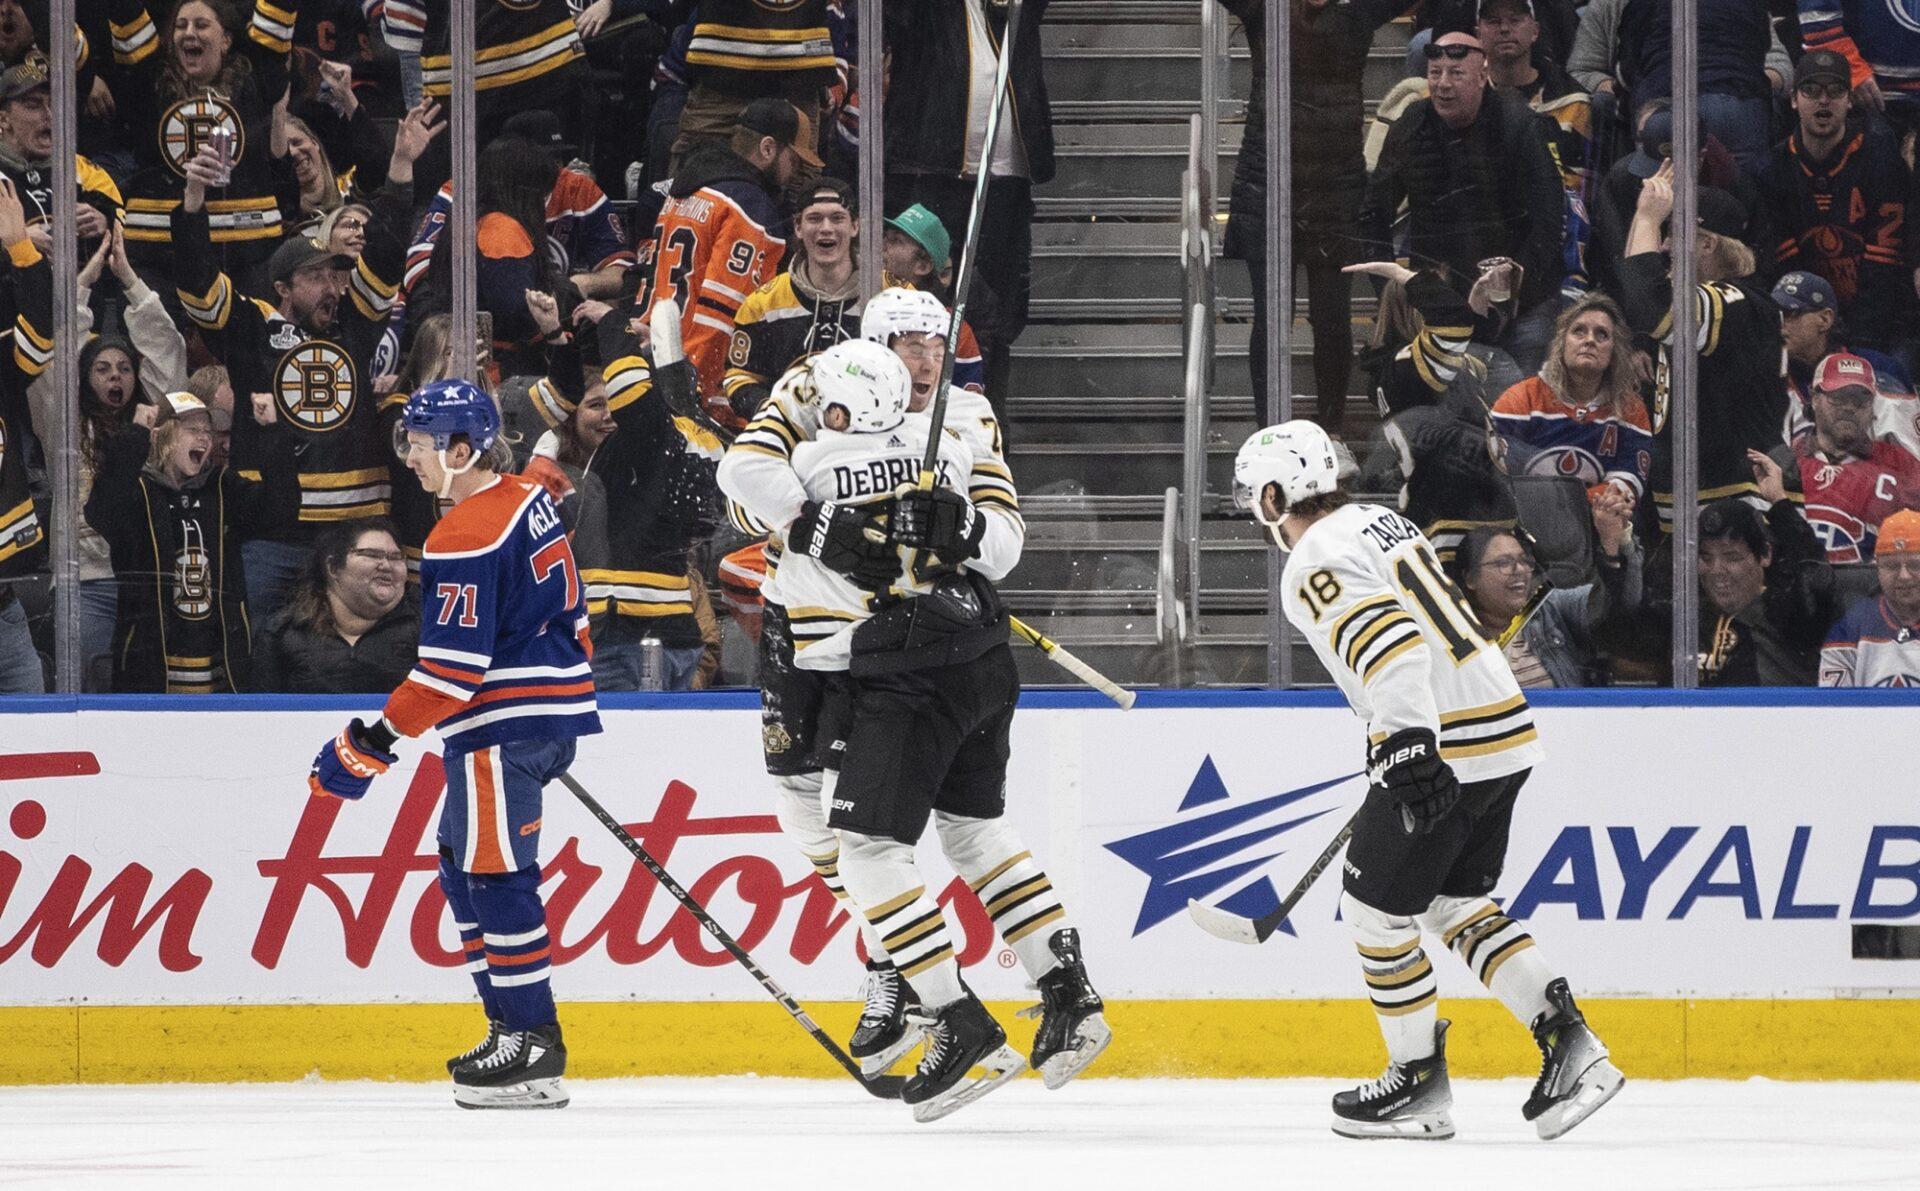 Oilers vs Bruins Prediction & Picks (3/5): Another Barn Burner Between Cup Contenders